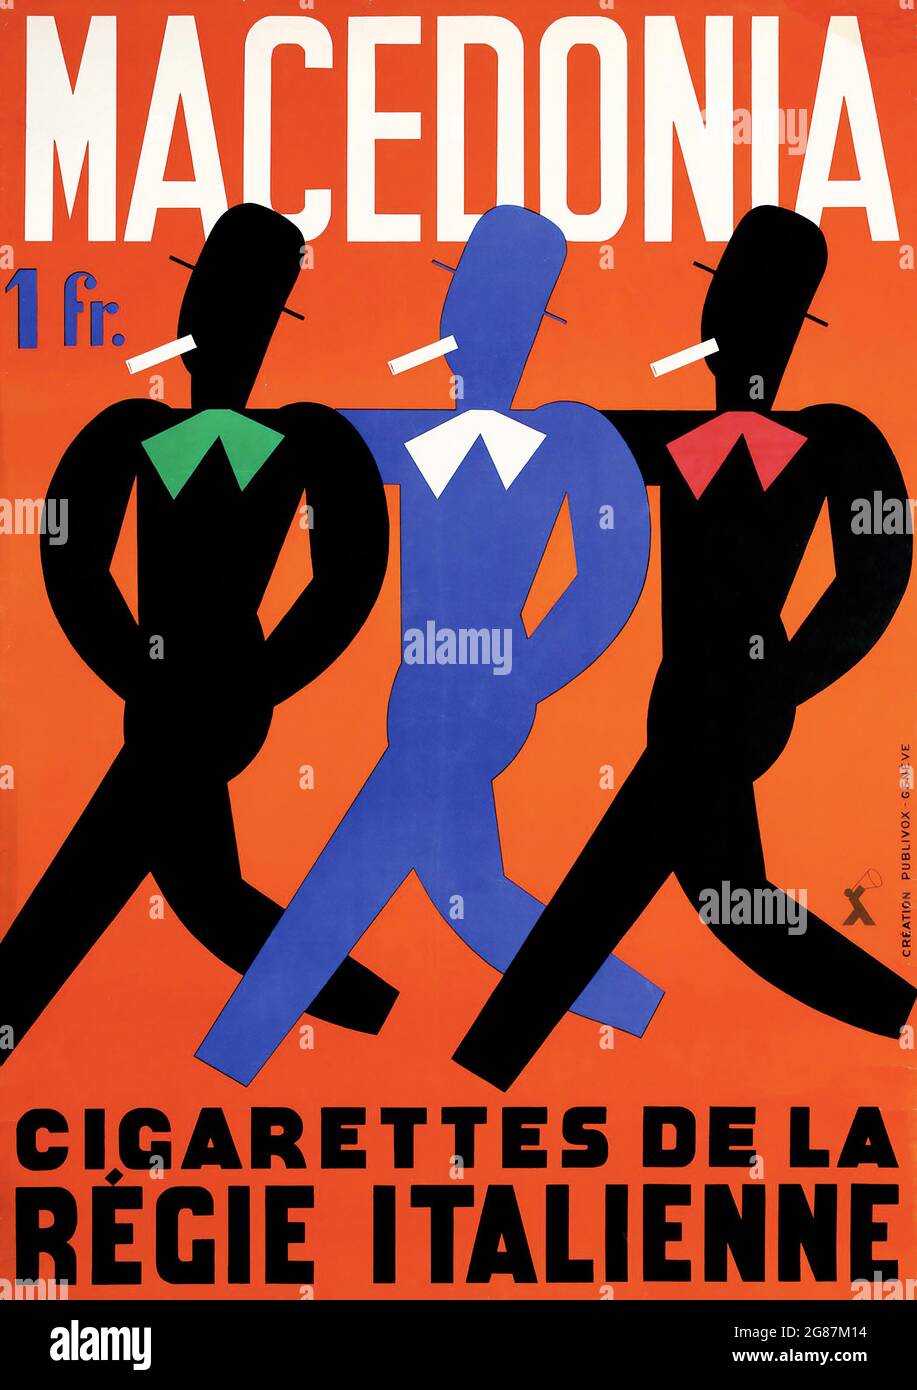 1930s Macedonia Swiss Cigarette Poster – Vintage advertisement. Classic poster / ad for cigarettes. Cigarettes de la Régie Italienne. Stock Photo